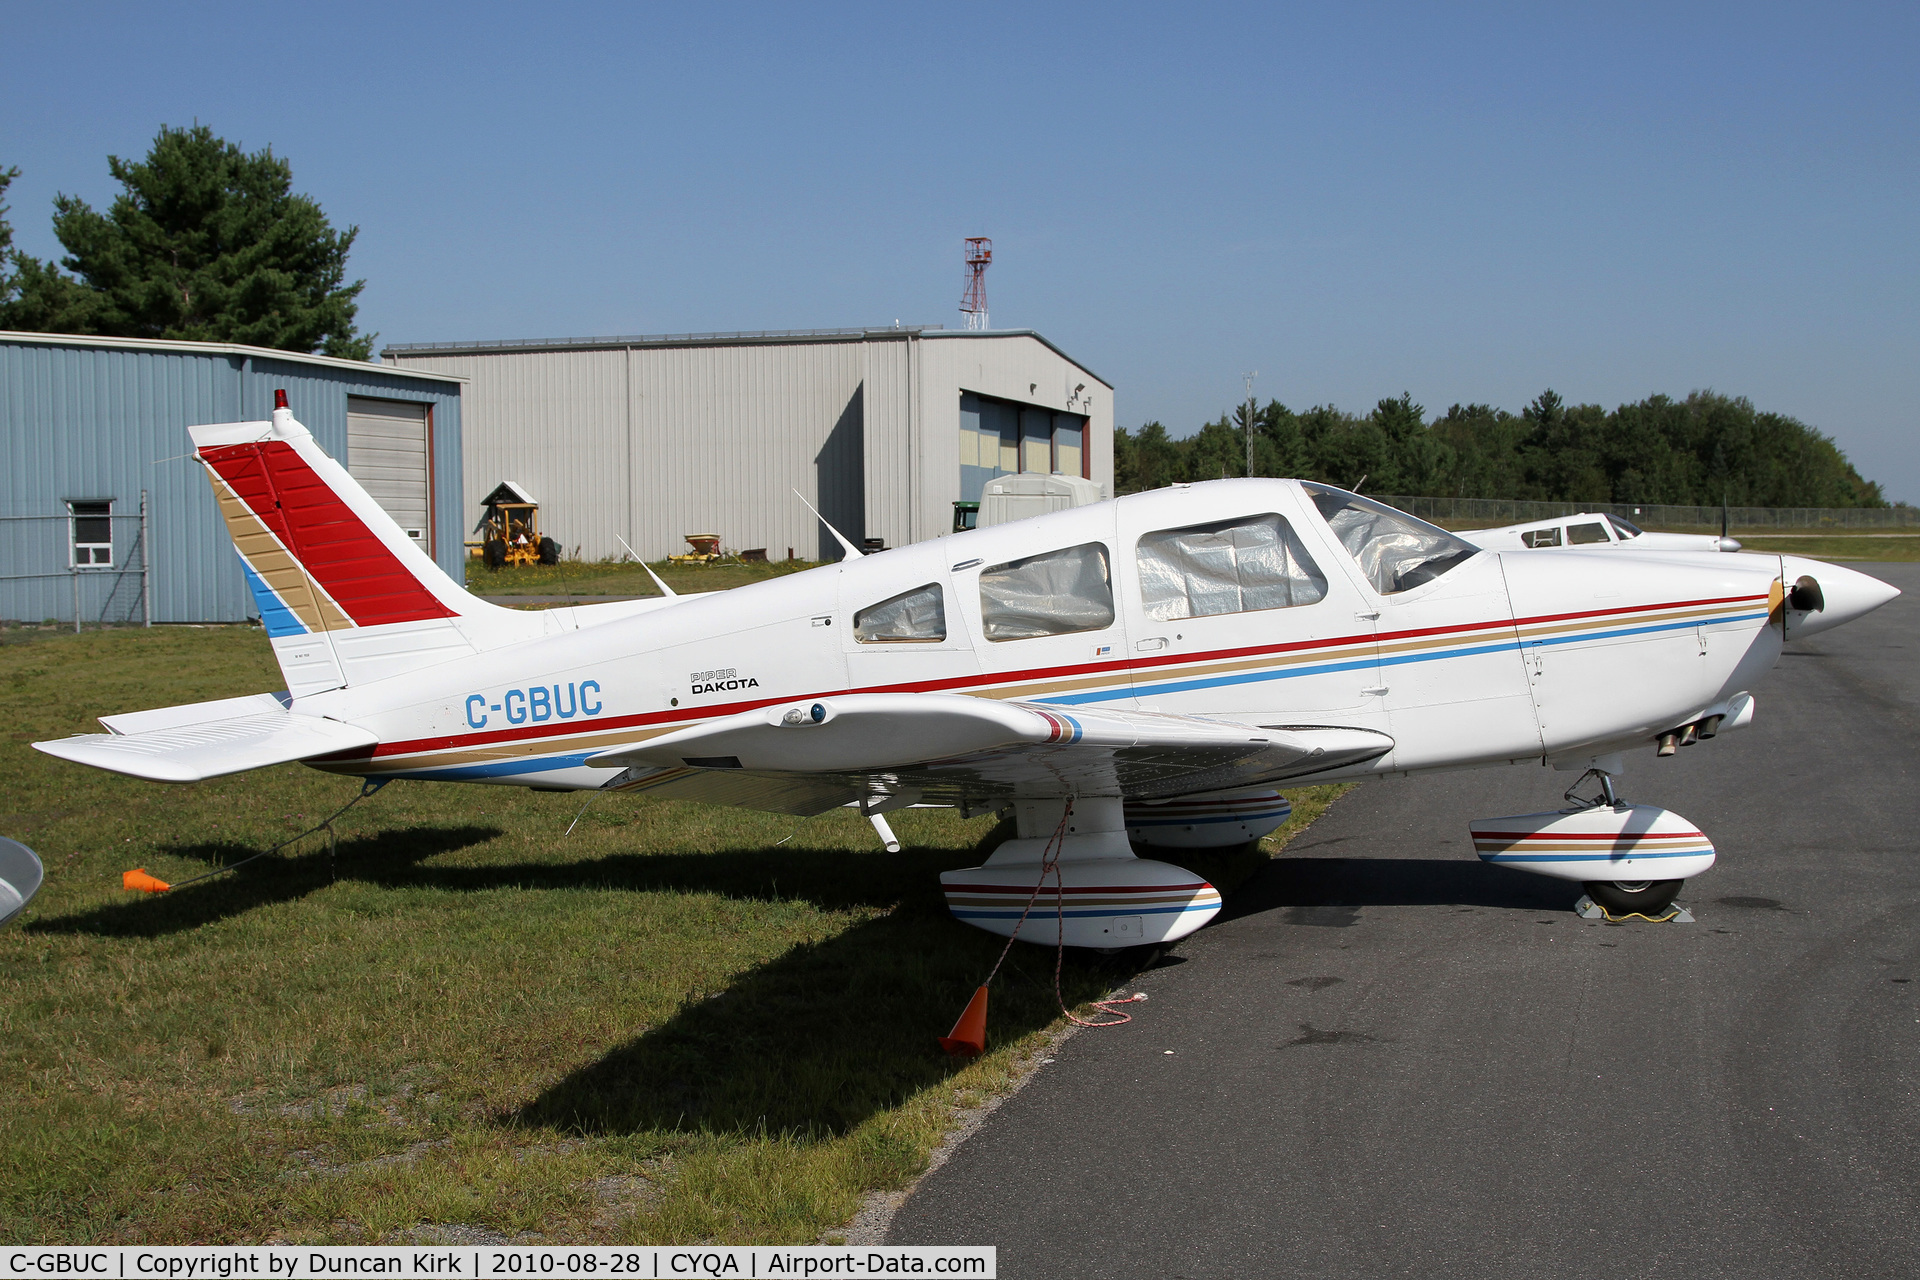 C-GBUC, 1980 Piper PA-28-236 Dakota C/N 28-8011117, A popular summer destination is Muskoka airport